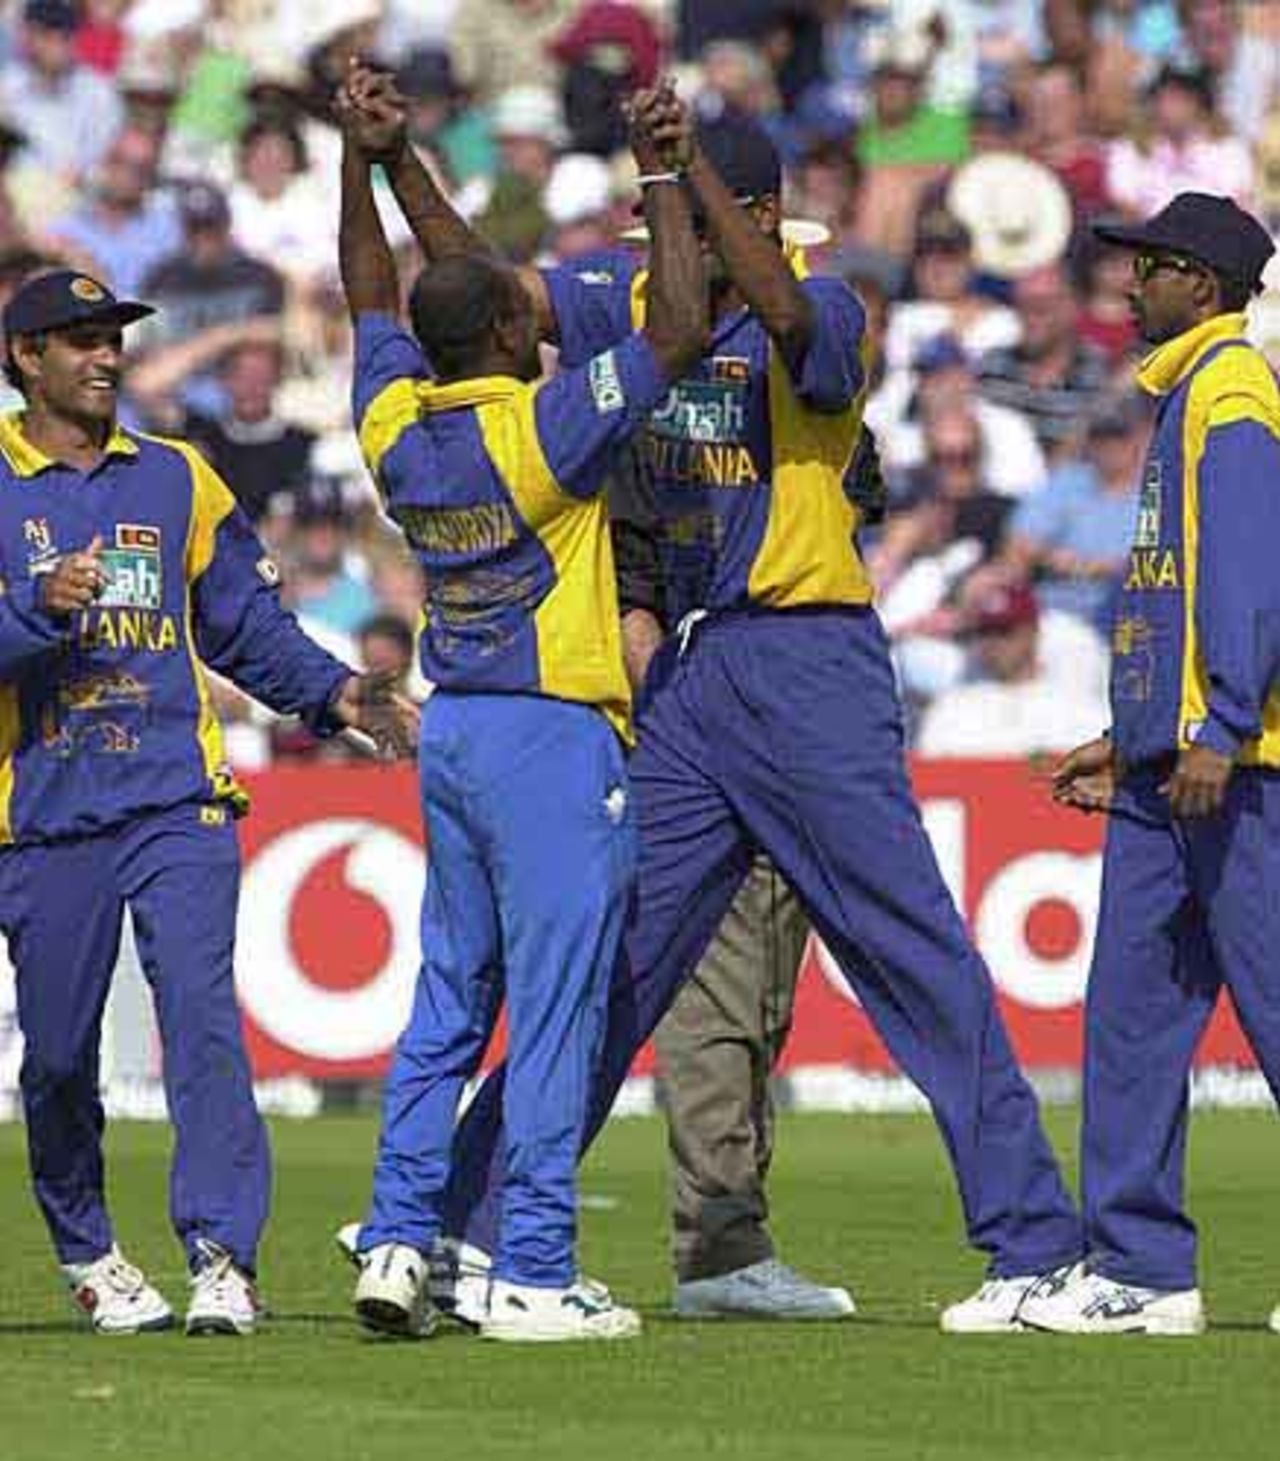 The long and the short of it ; Zoysa has just caught Irani off the bowling of Jarasuriya., England v Sri Lanka at Manchester, July 2002